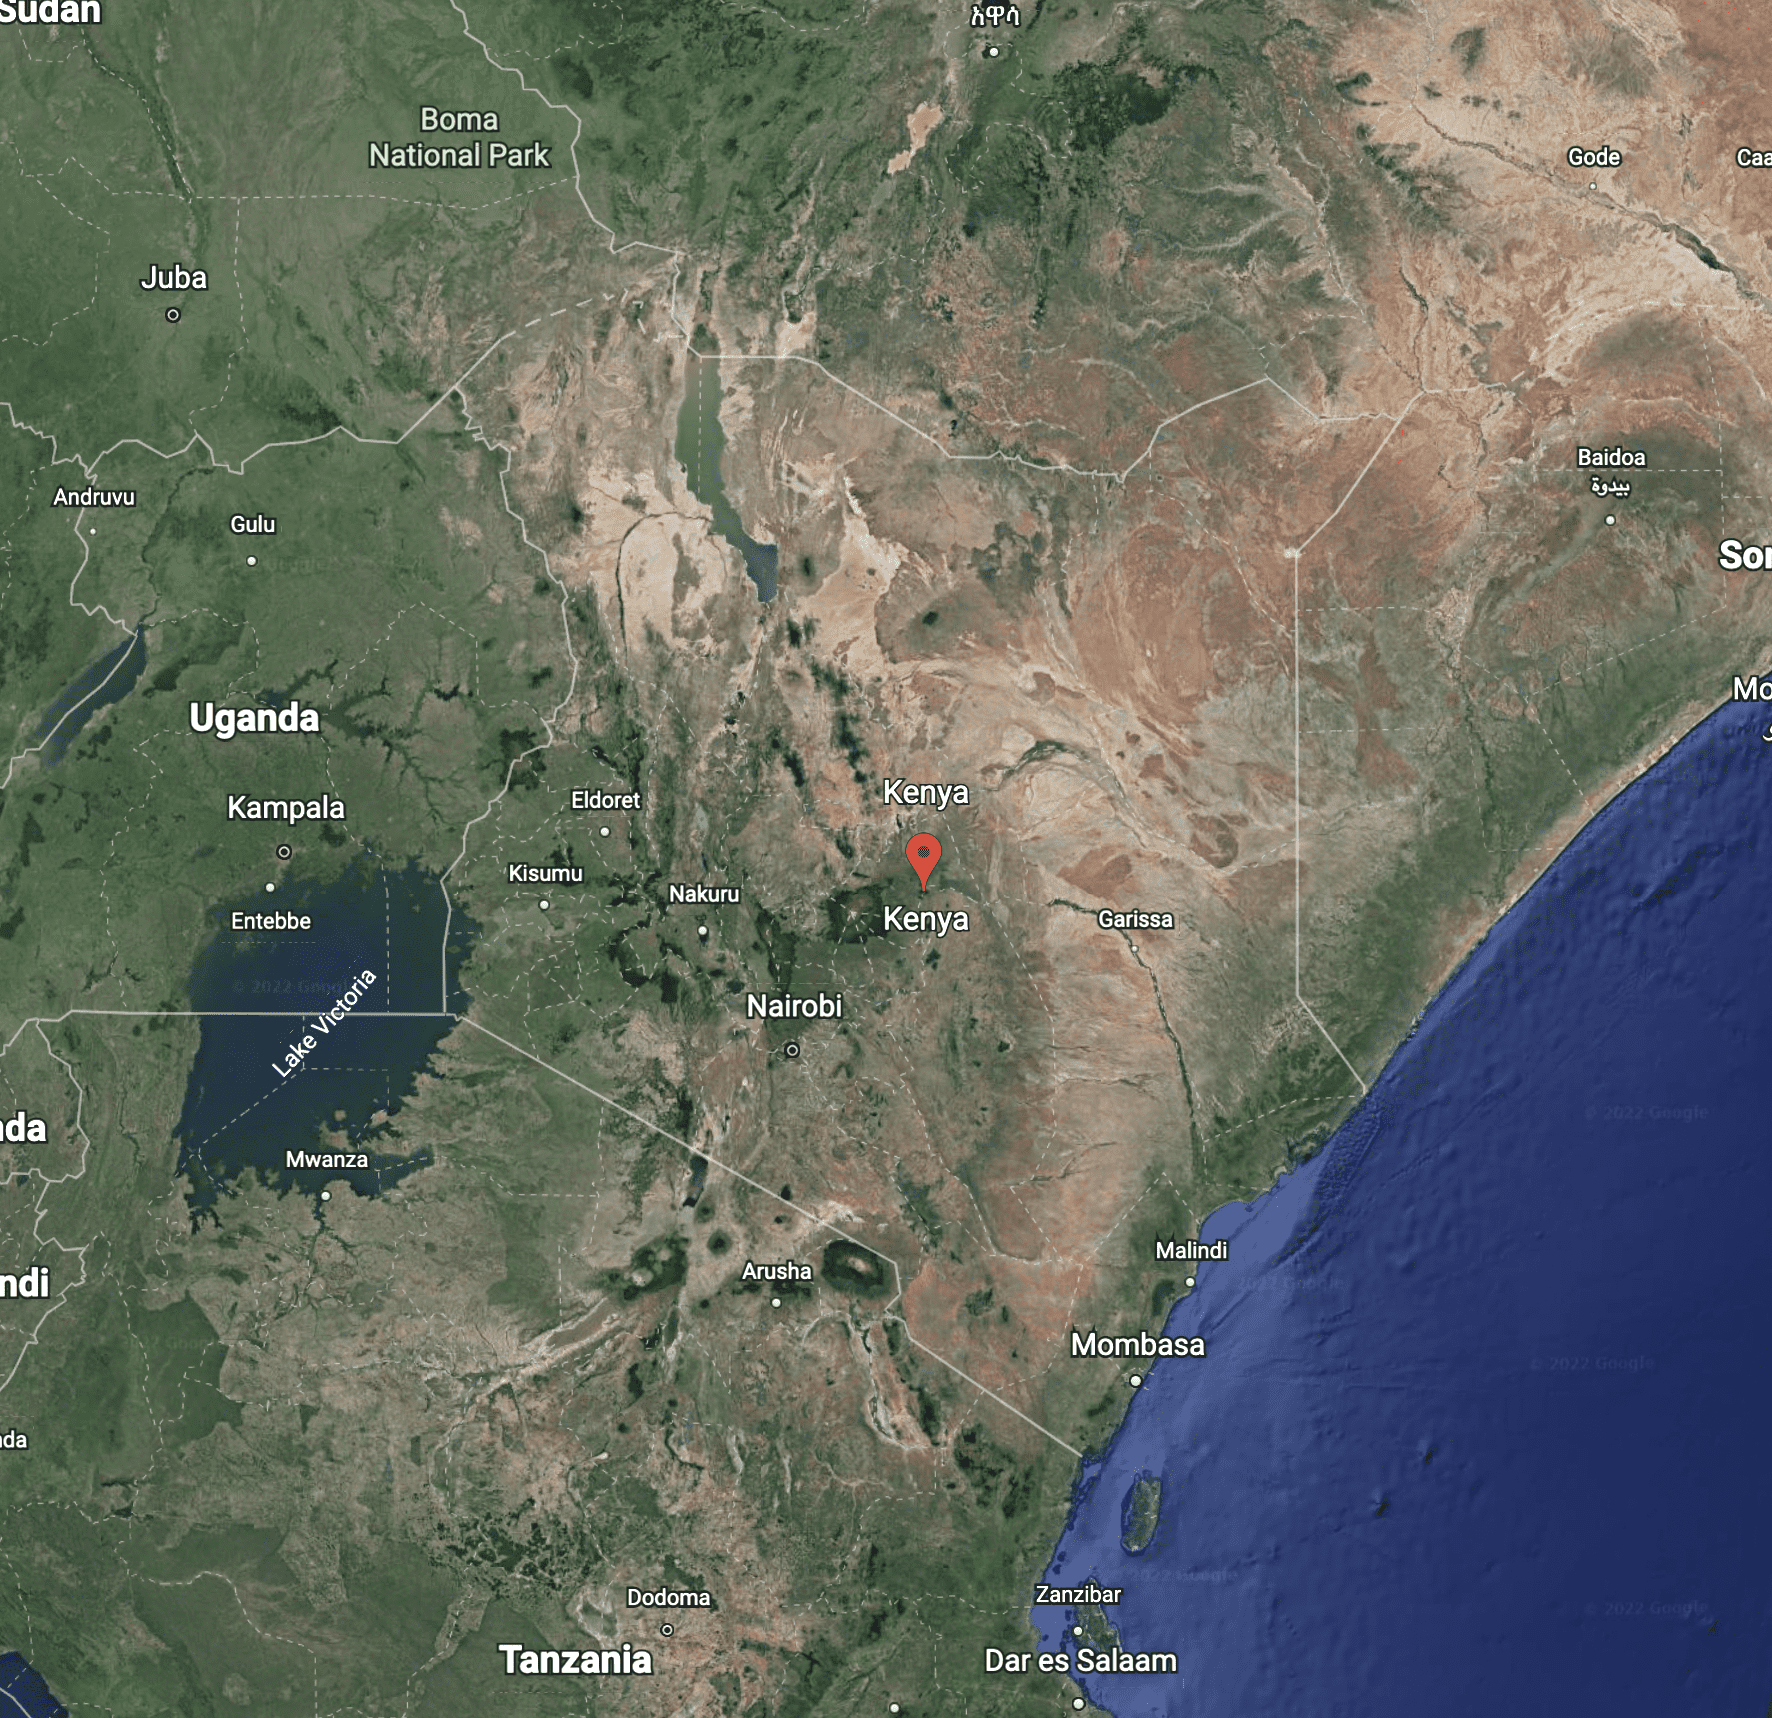 Google Earth Satellite Image of Kenya